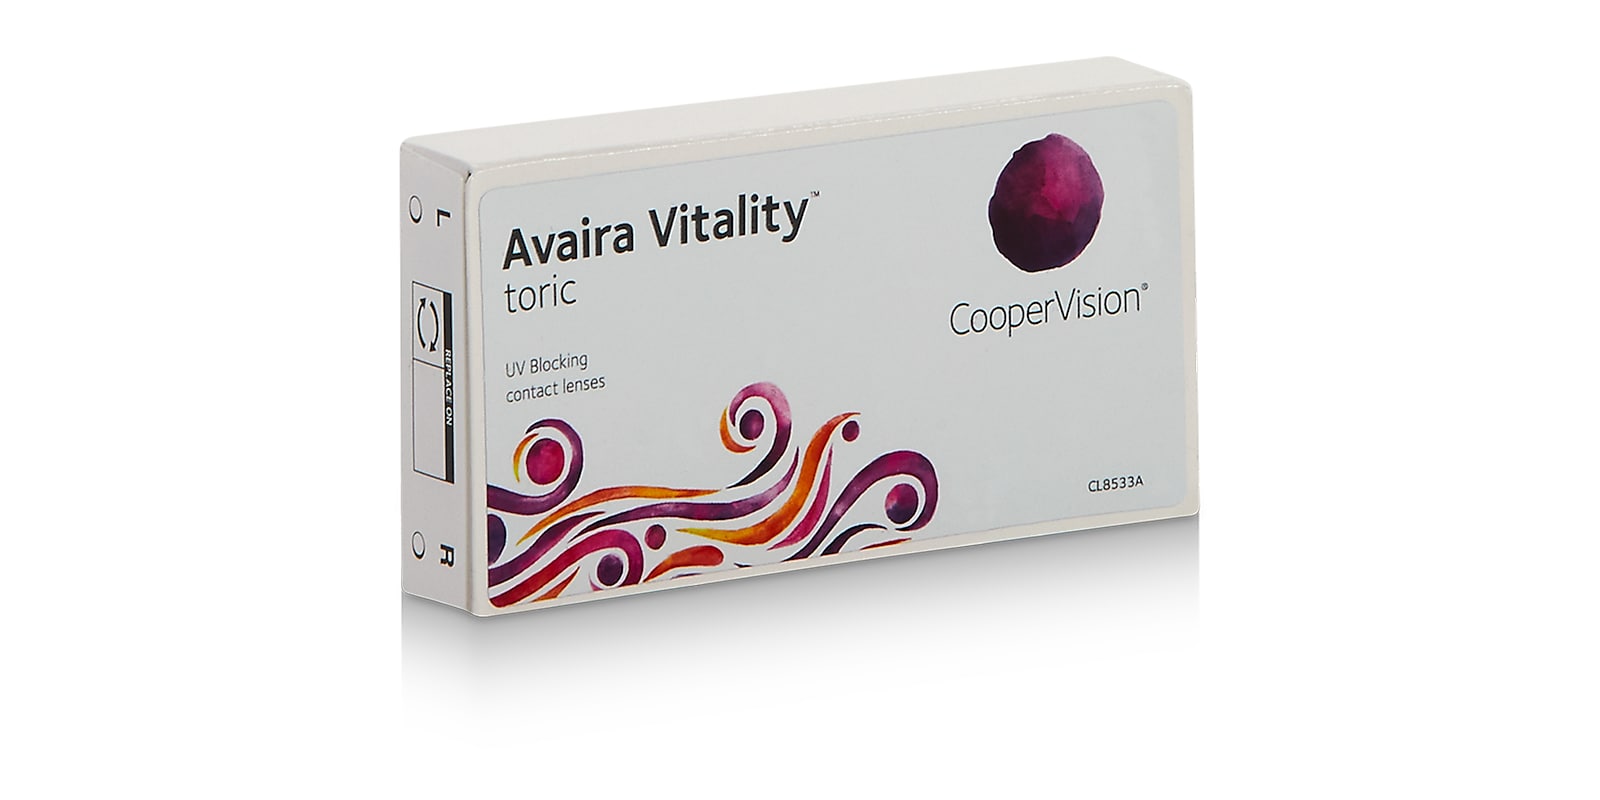 Avaira Vitality Toric, 6 pack contact lenses